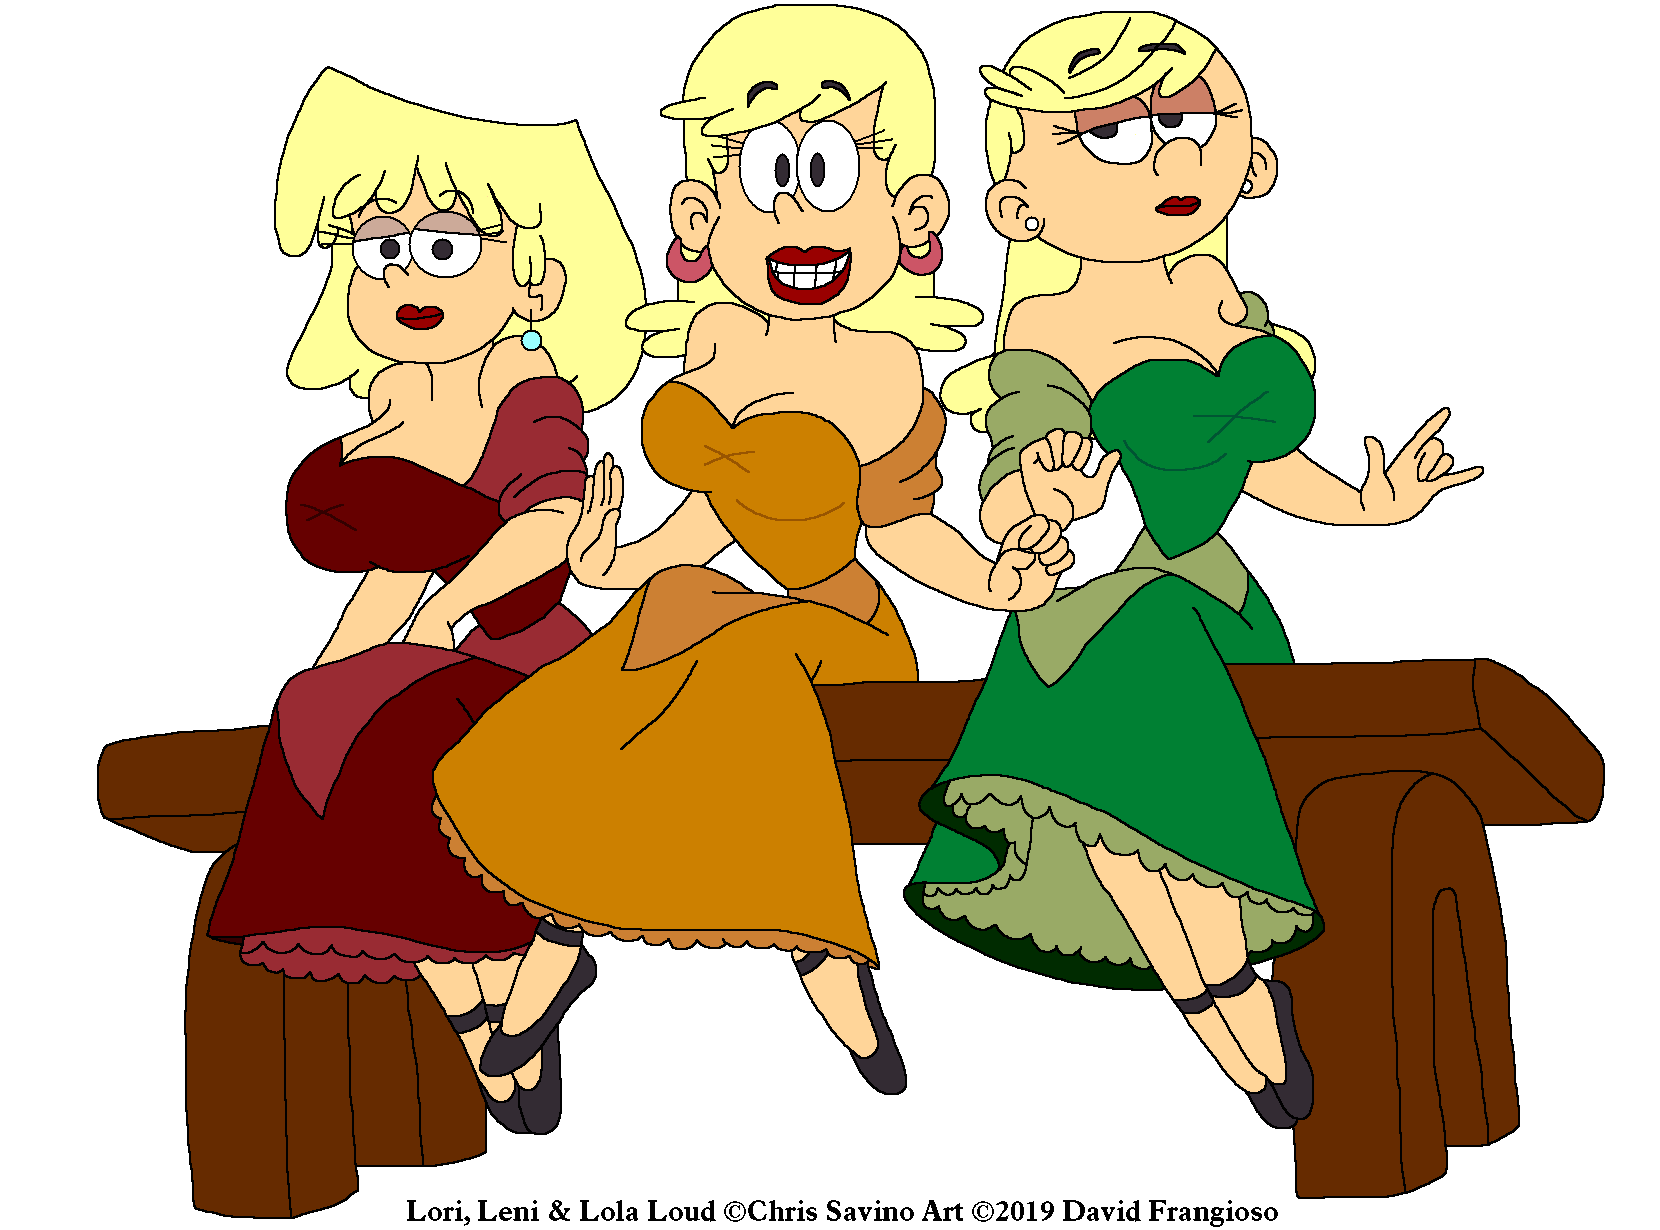 Lola, Leni & Lola Loud as Bimbettes. 